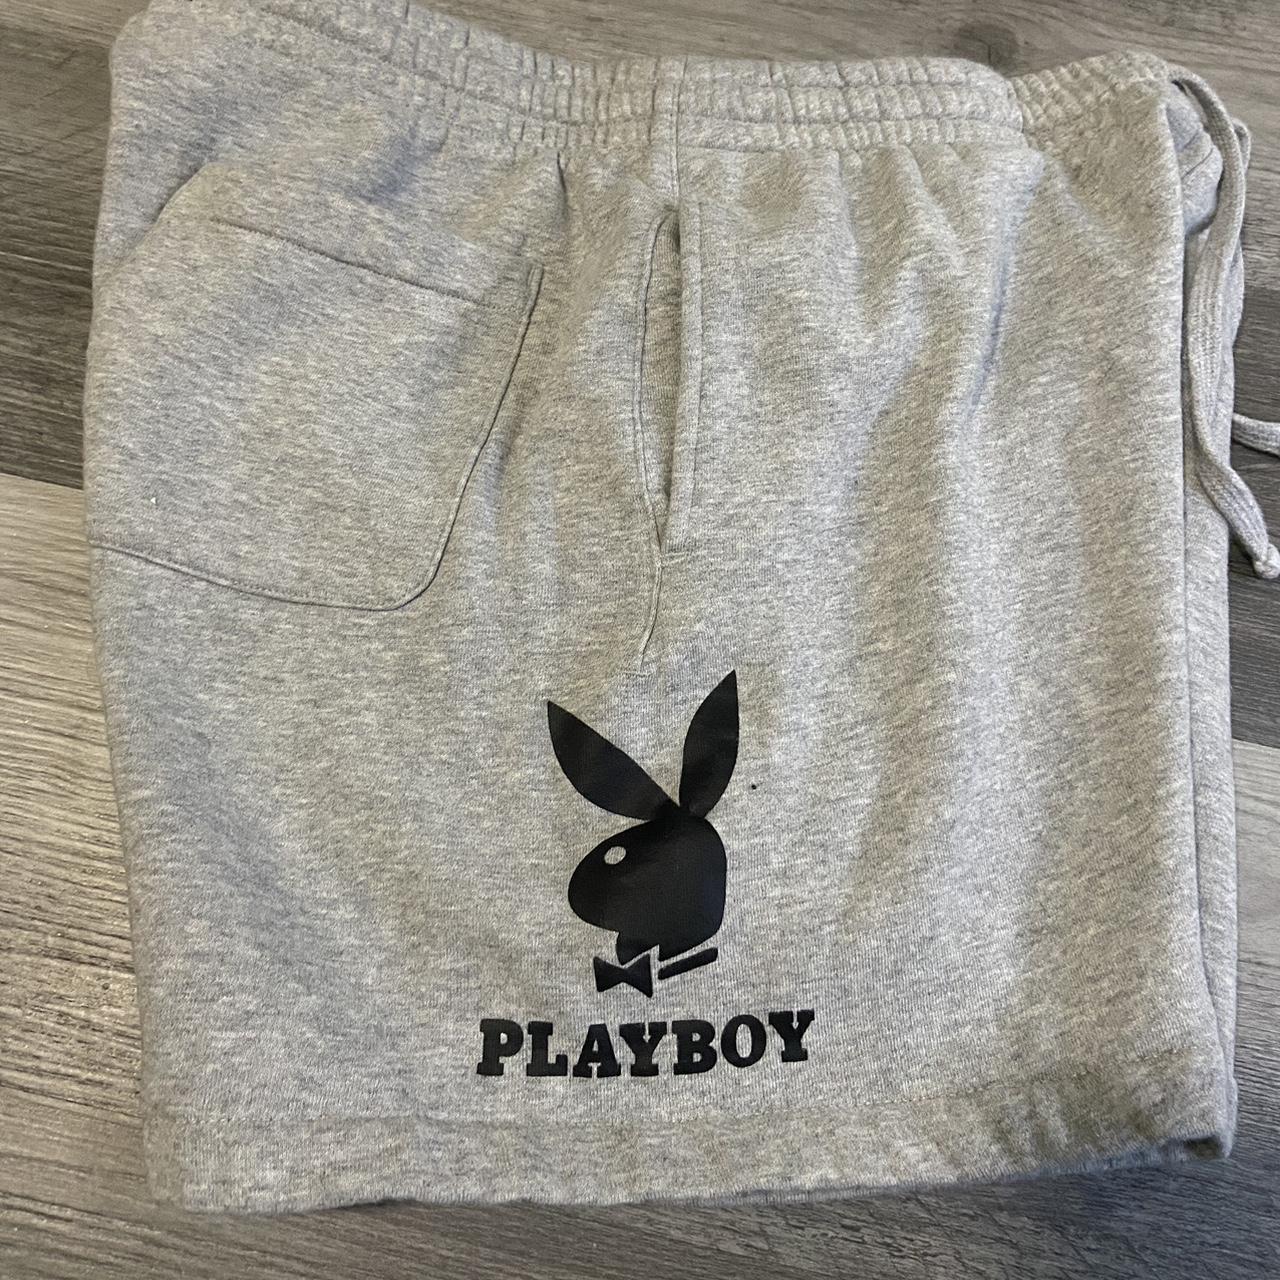 Playboy Men's Grey and Black Shorts